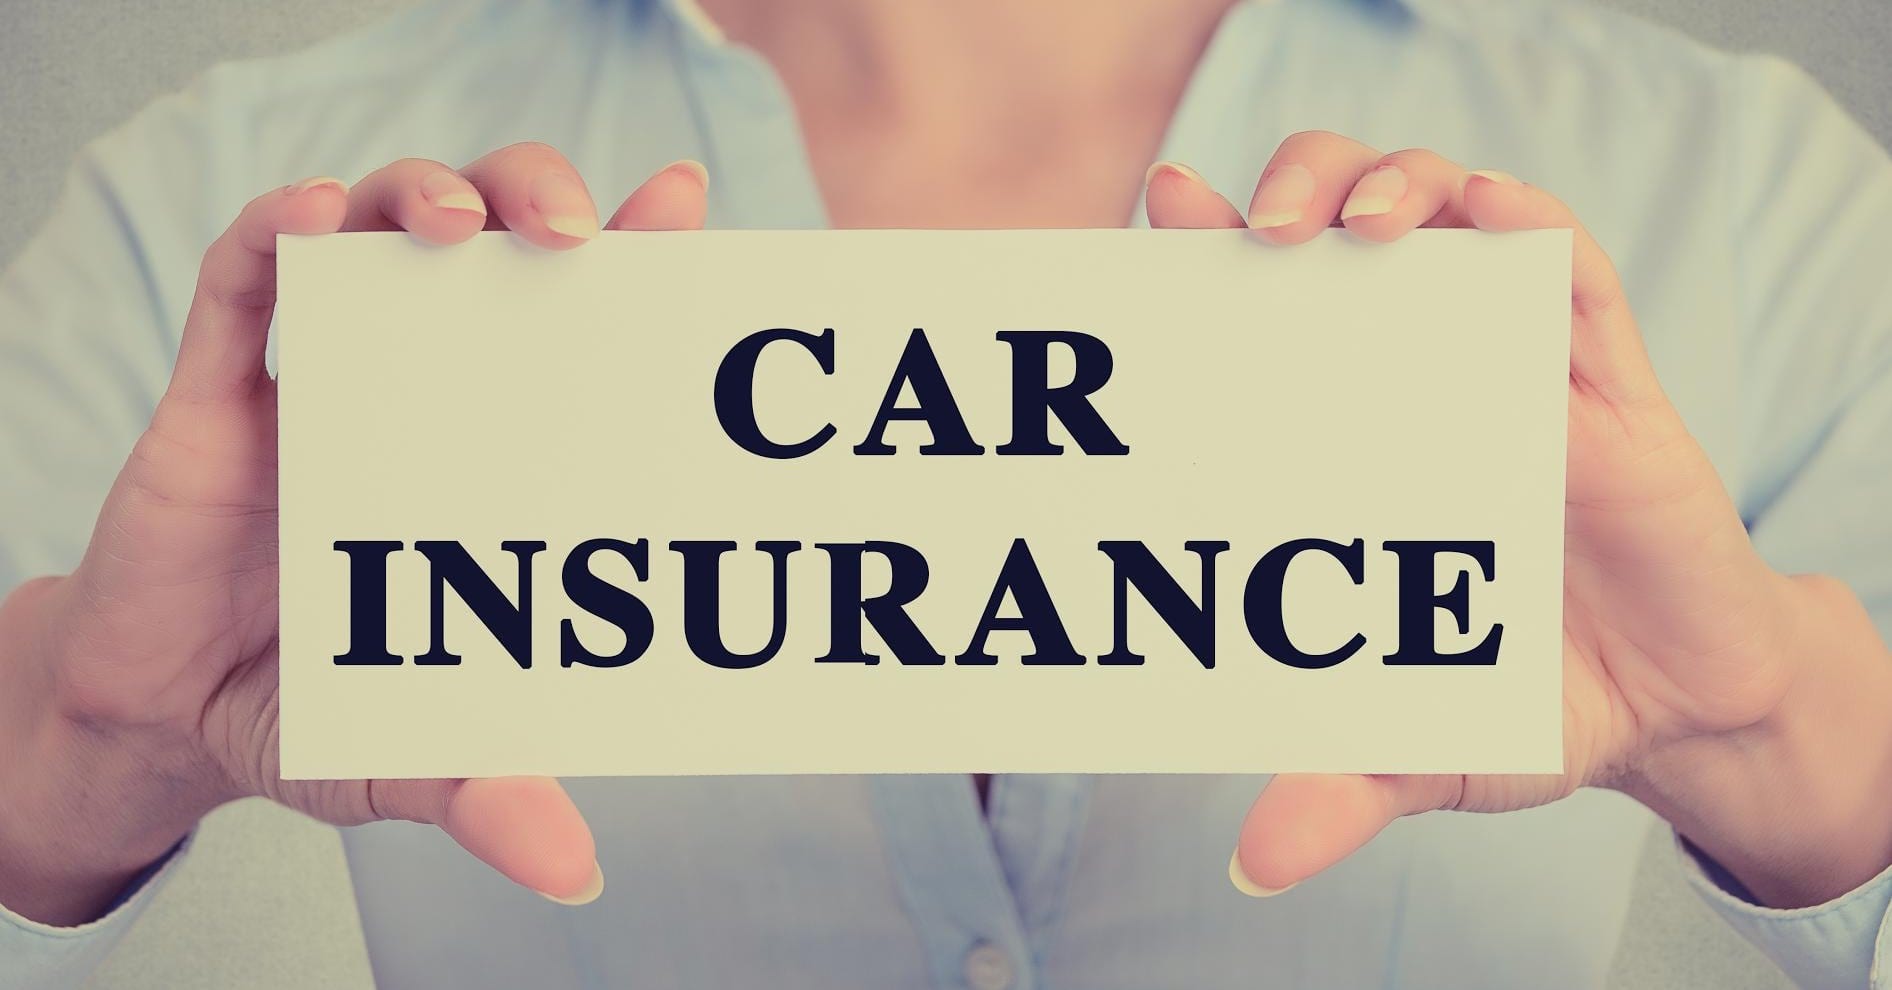 EINSURANCE car insurance quotes online